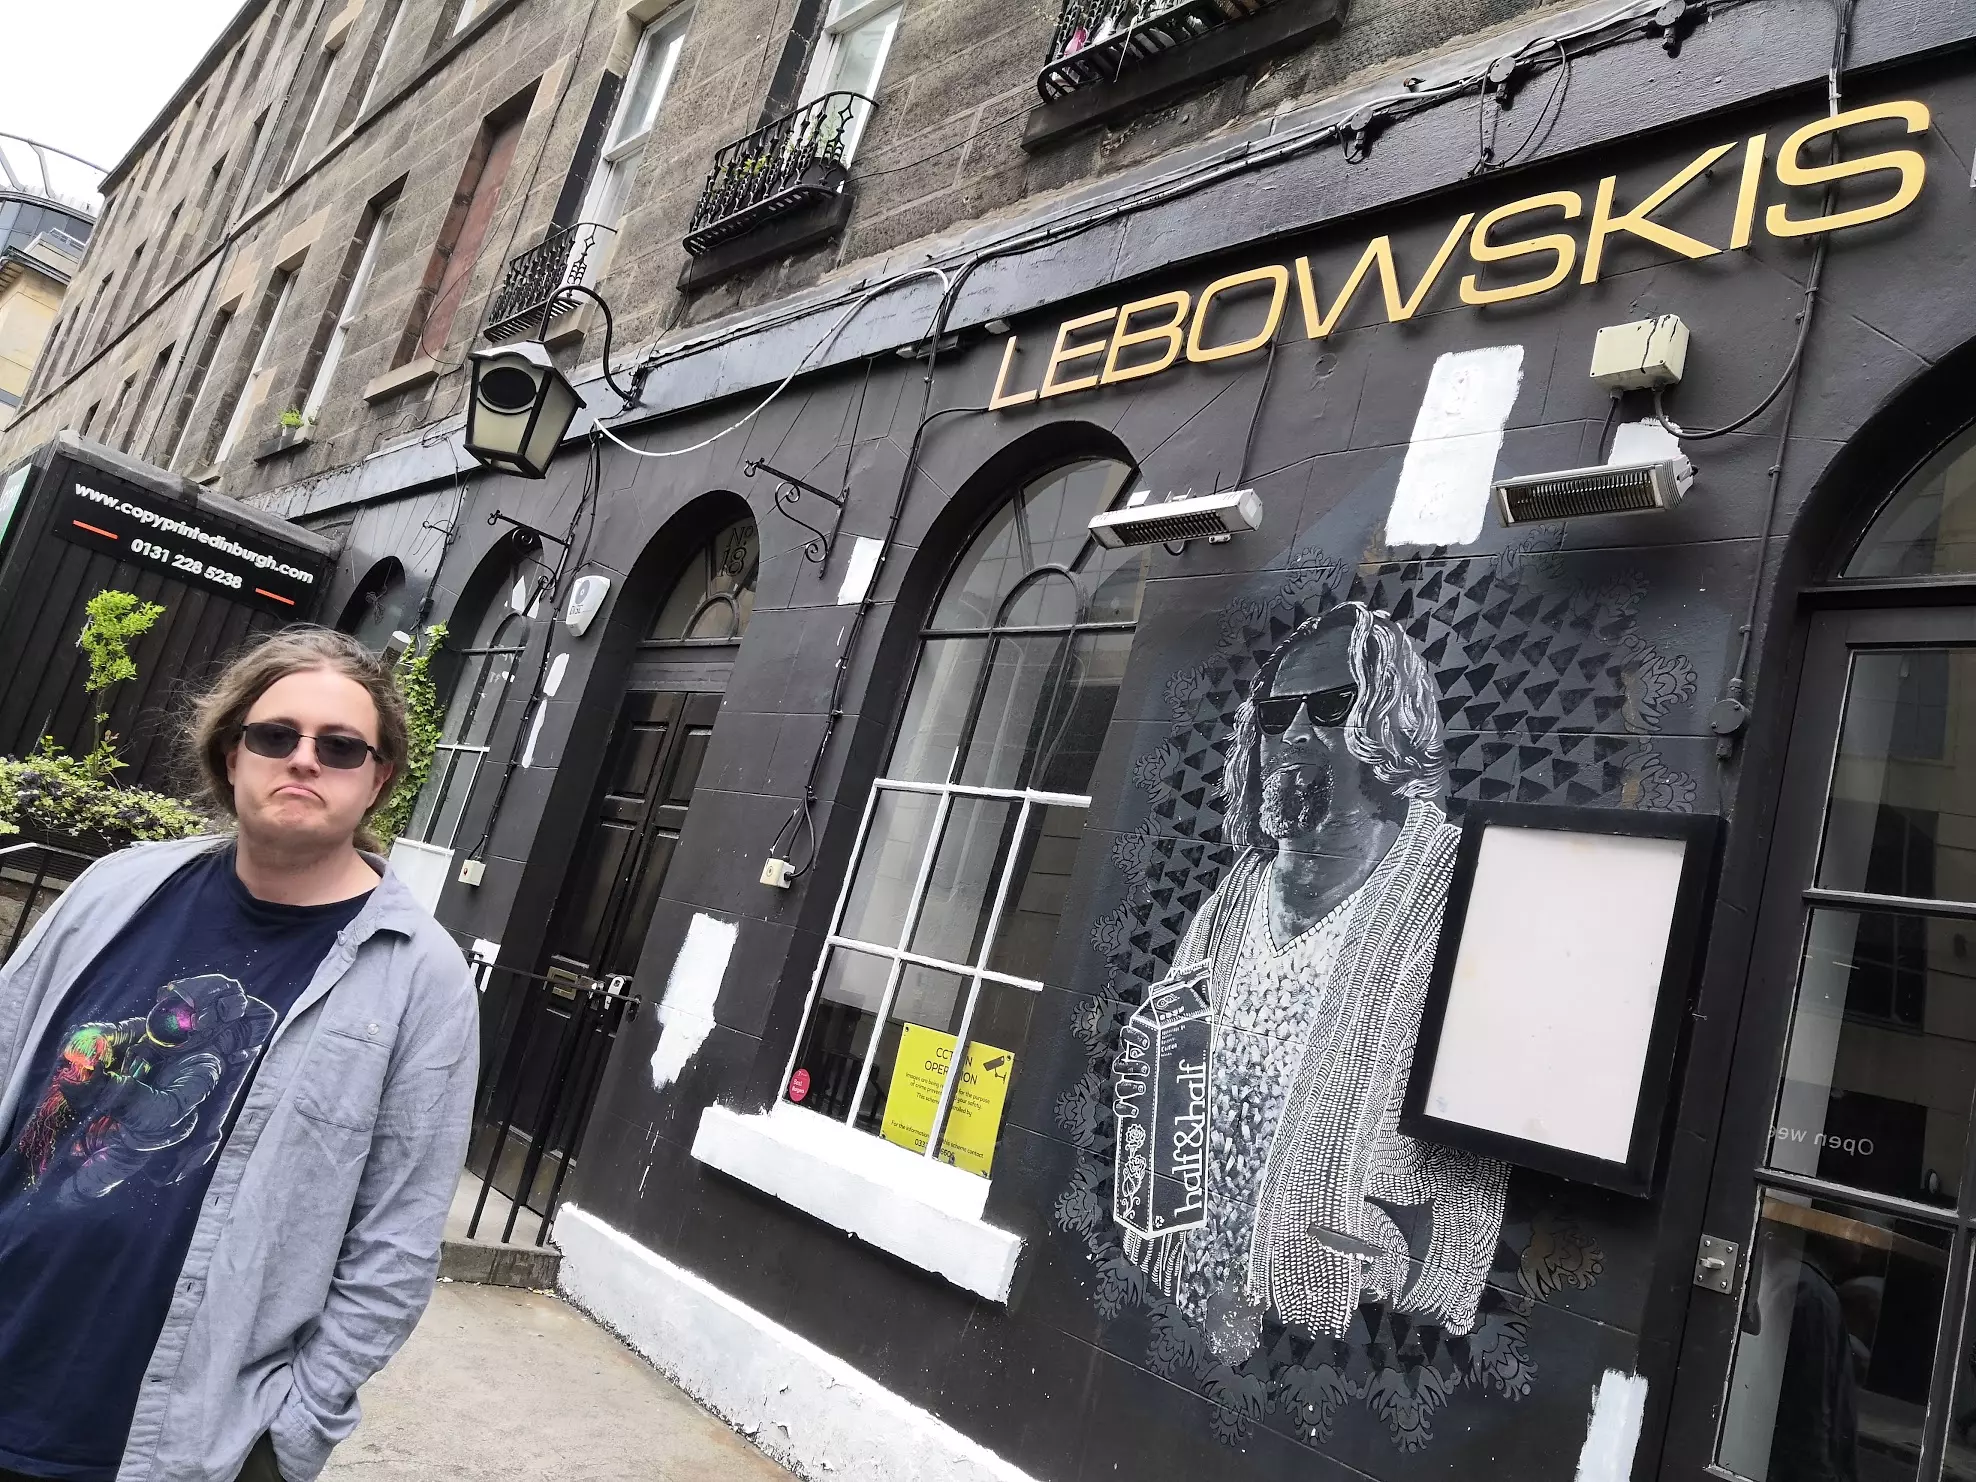 Todd laments the closure of Lebowski's